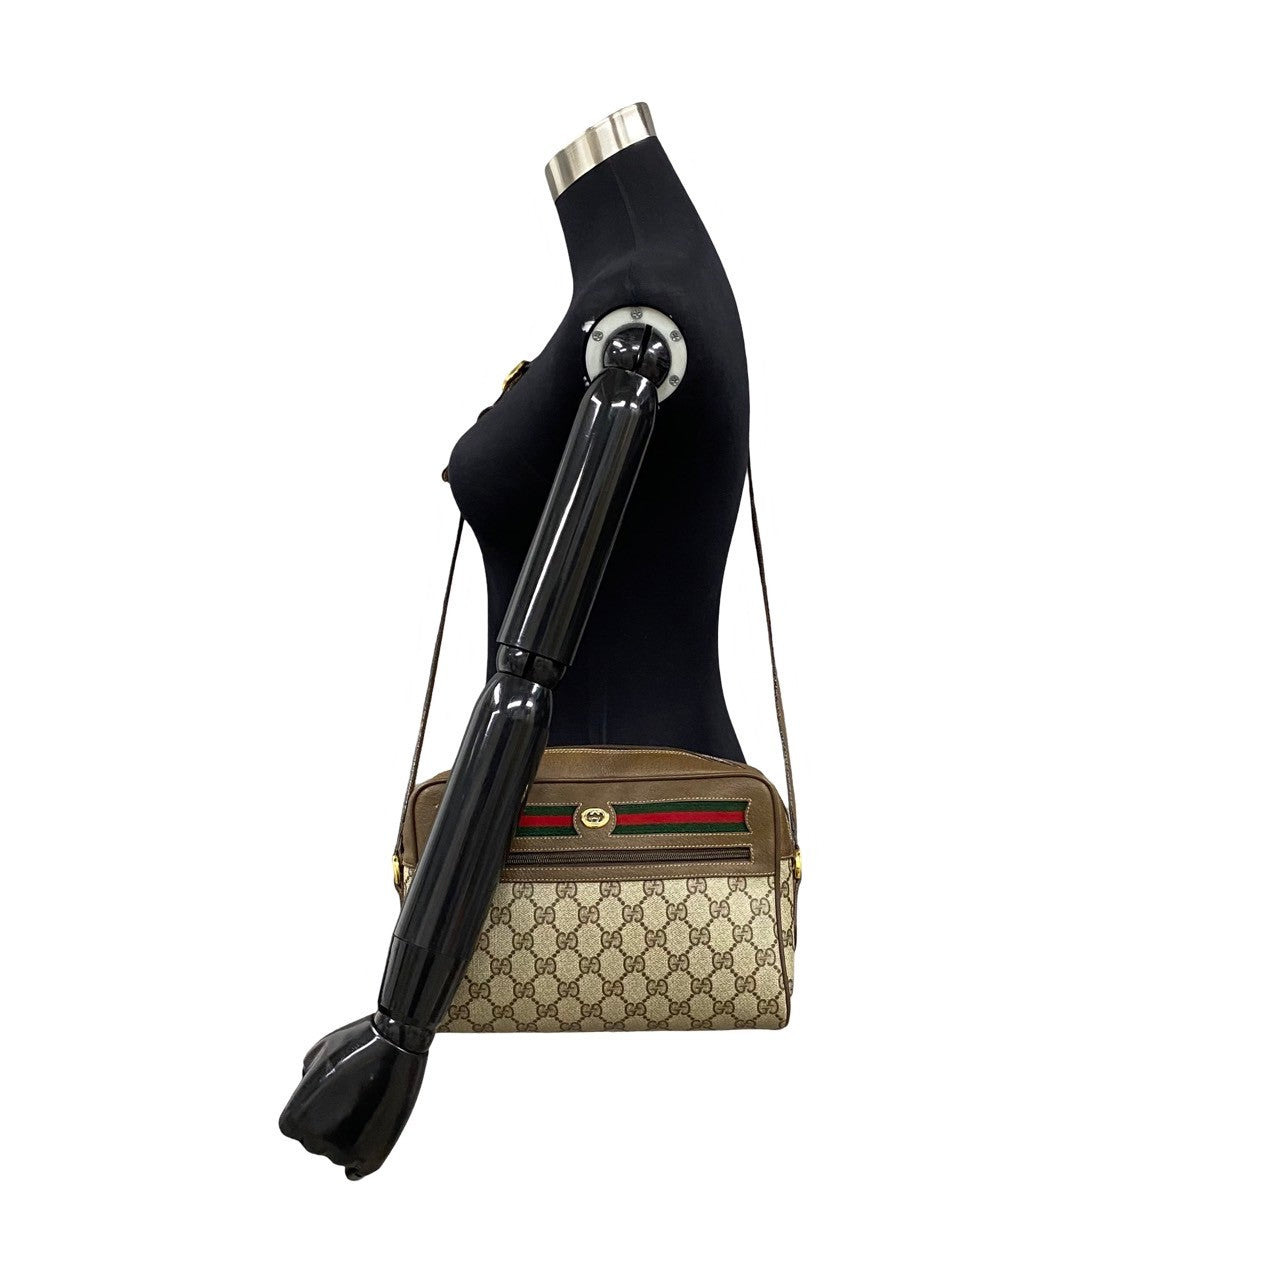 Gucci GG Supreme Ophidia Crossbody Bag  Canvas Crossbody Bag in Good condition